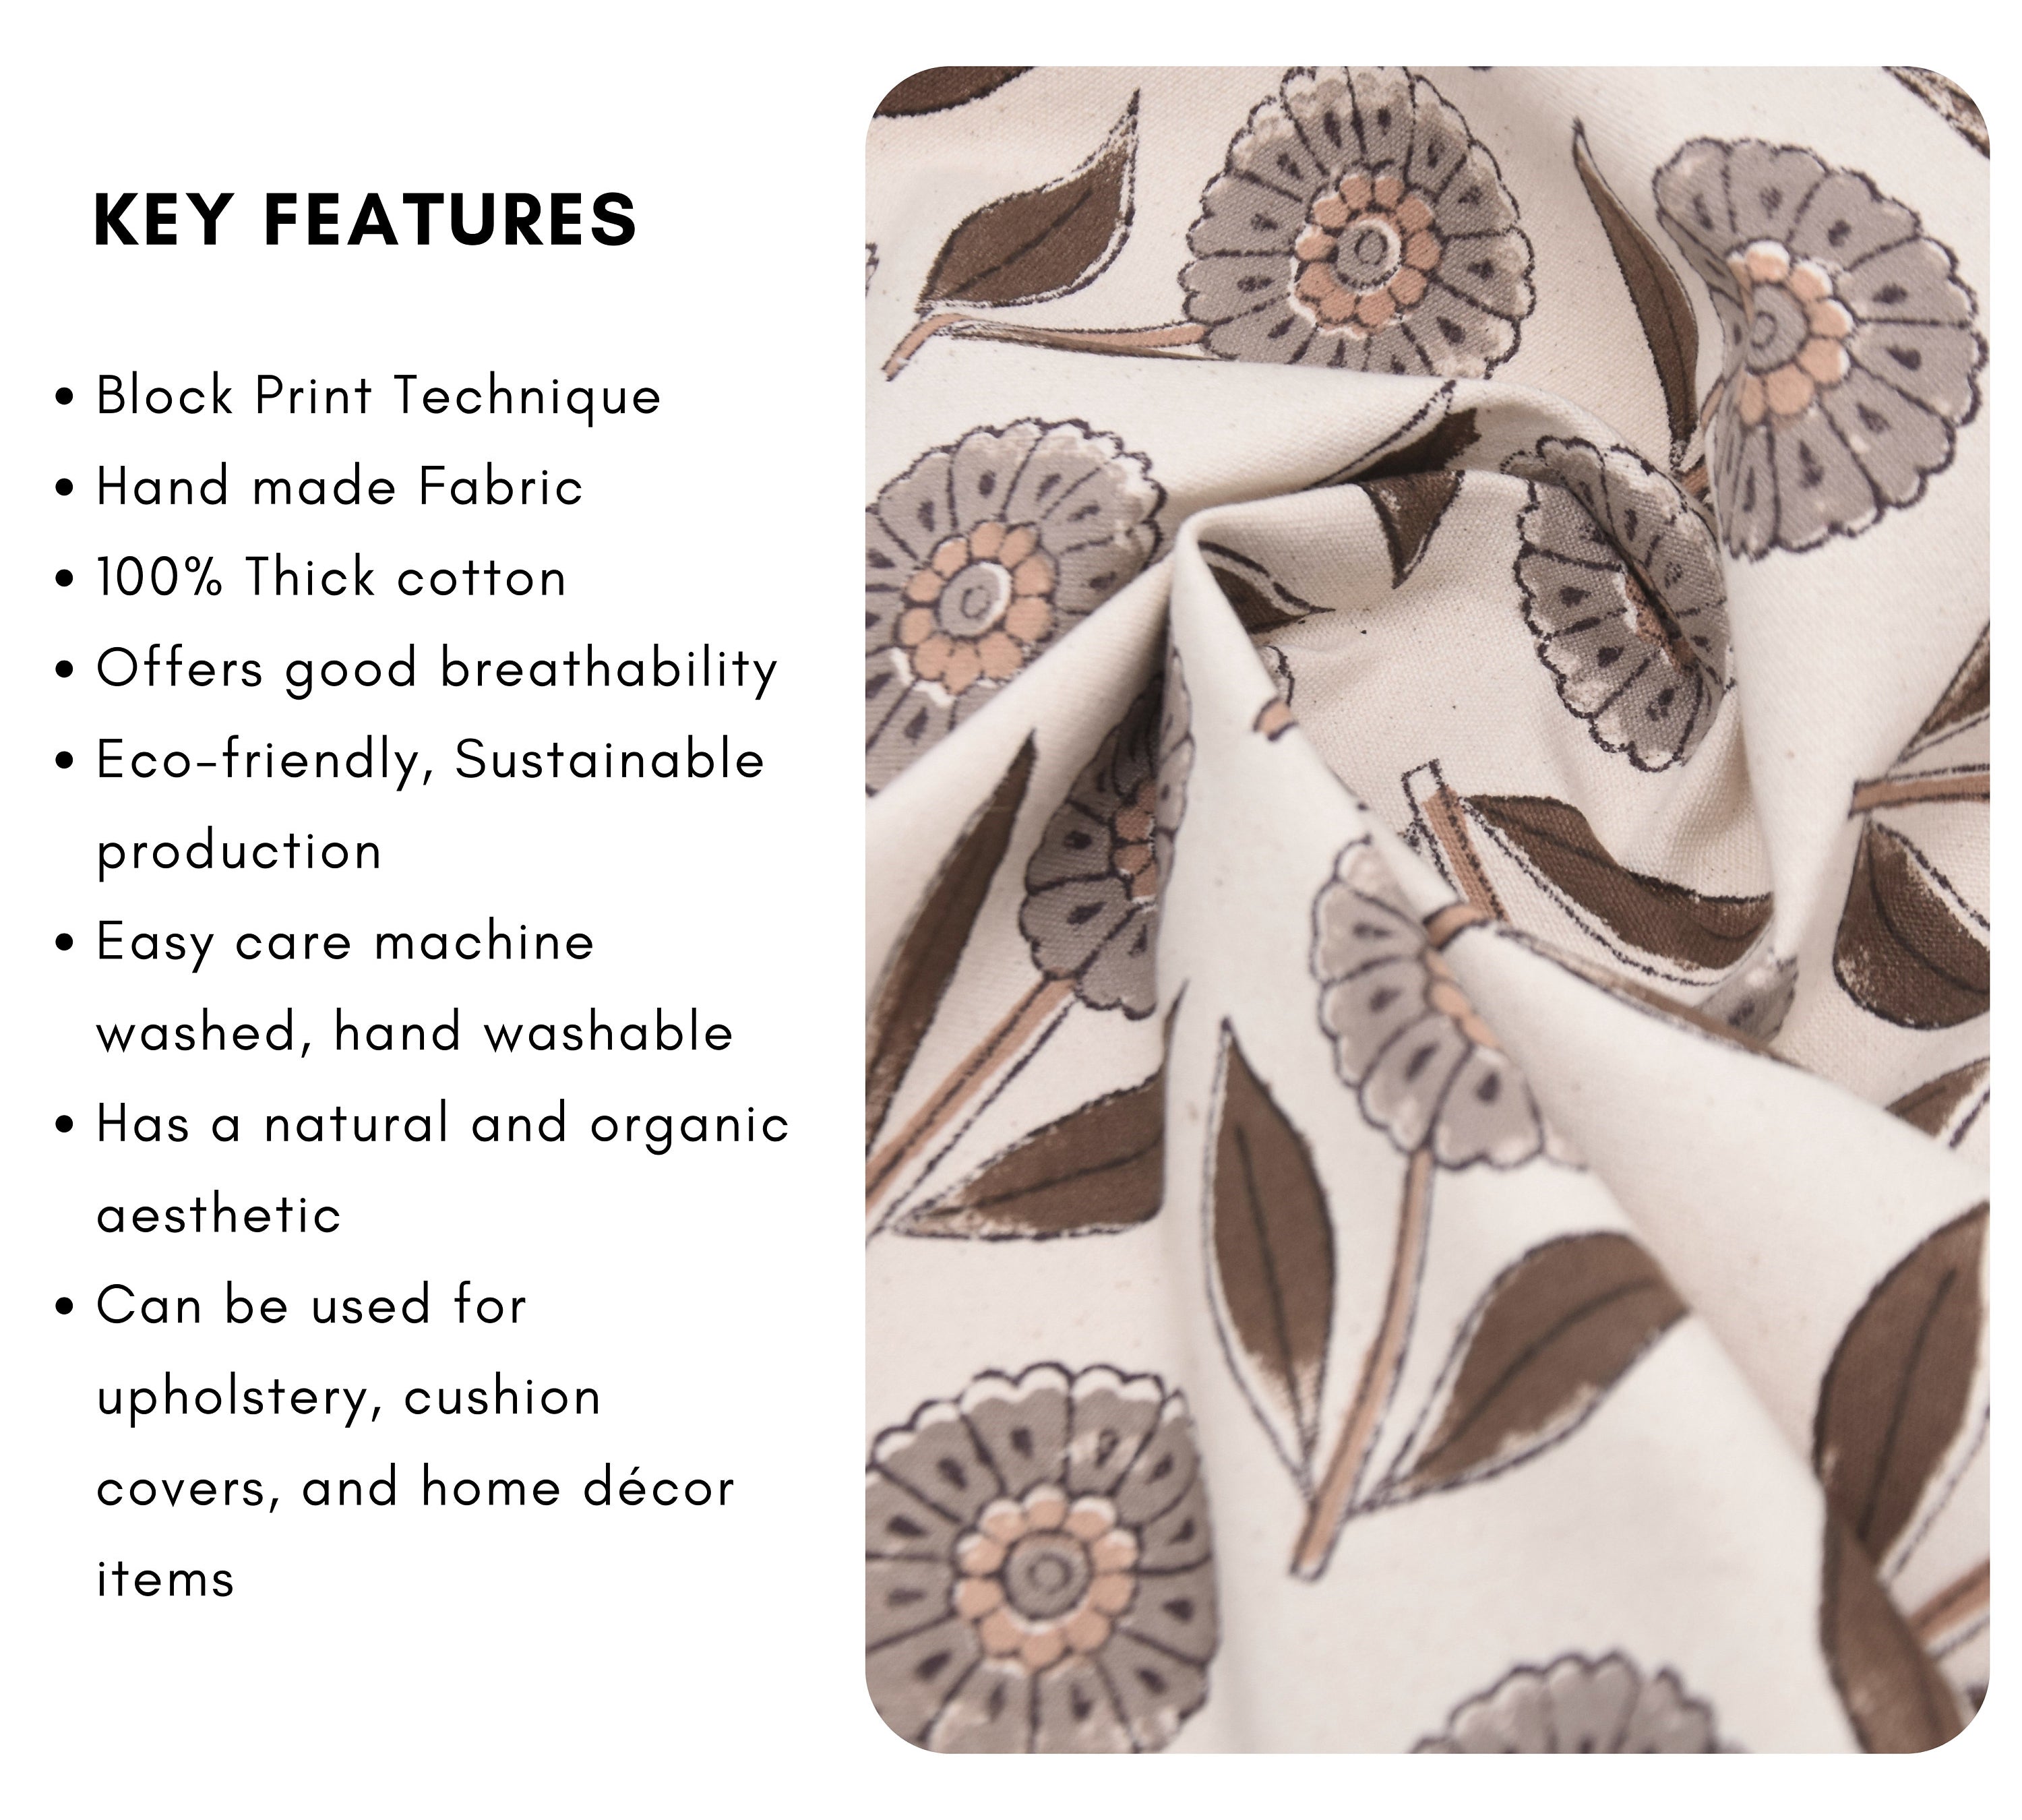 Thick cotton 44" wide, Sewing fabric, handloom linen, Indian fabric, block print fabric, floral linen - GENDA PUSHP